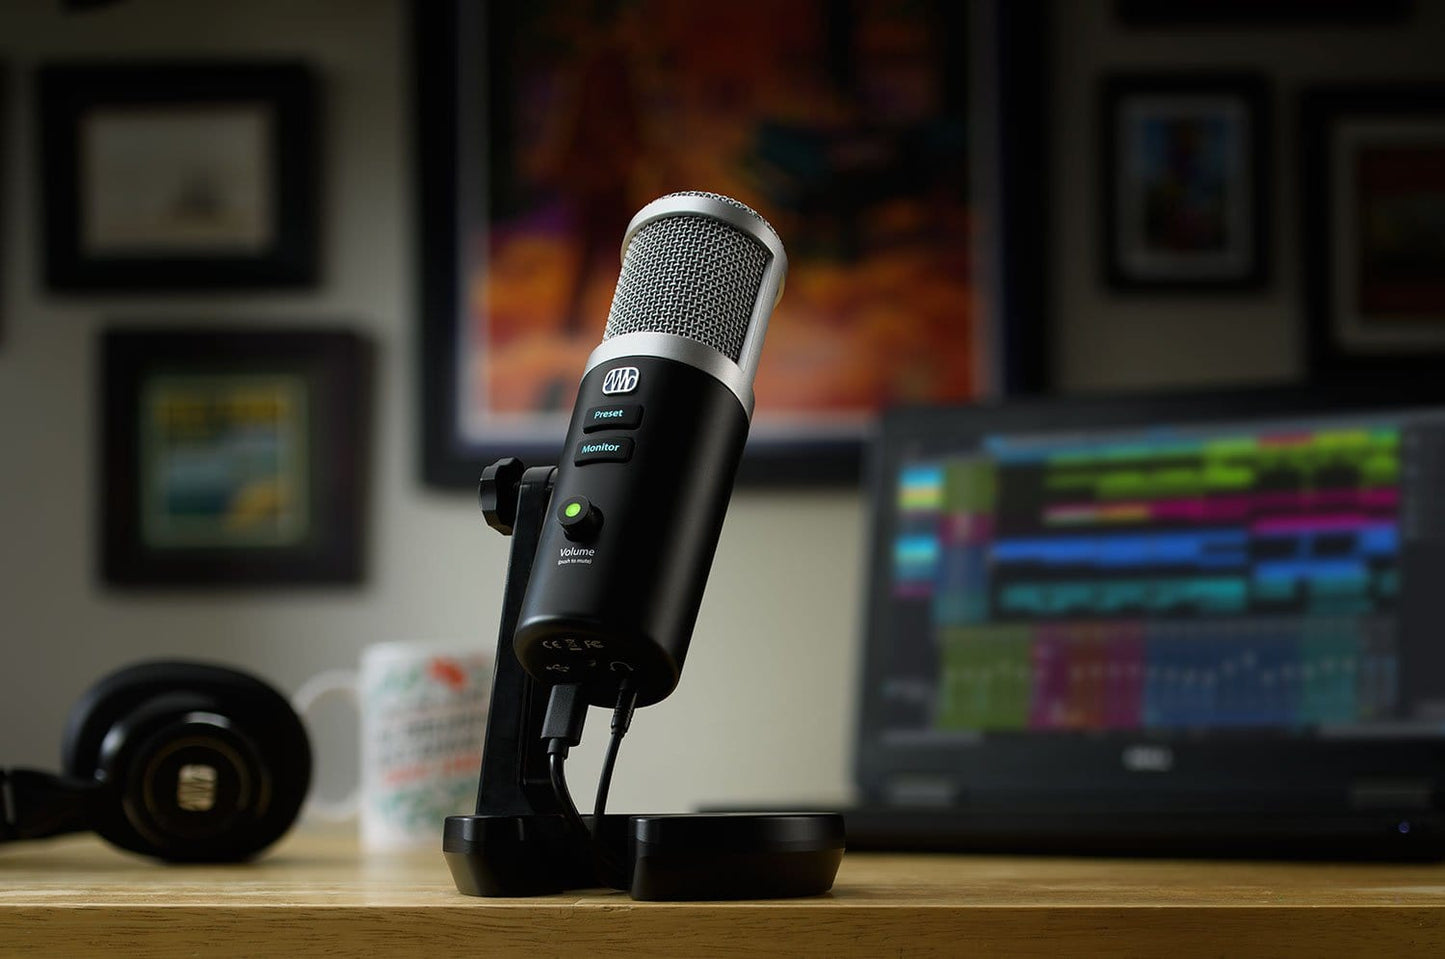 PreSonus Revelator USB-C Microphone With Stand - PSSL ProSound and Stage Lighting